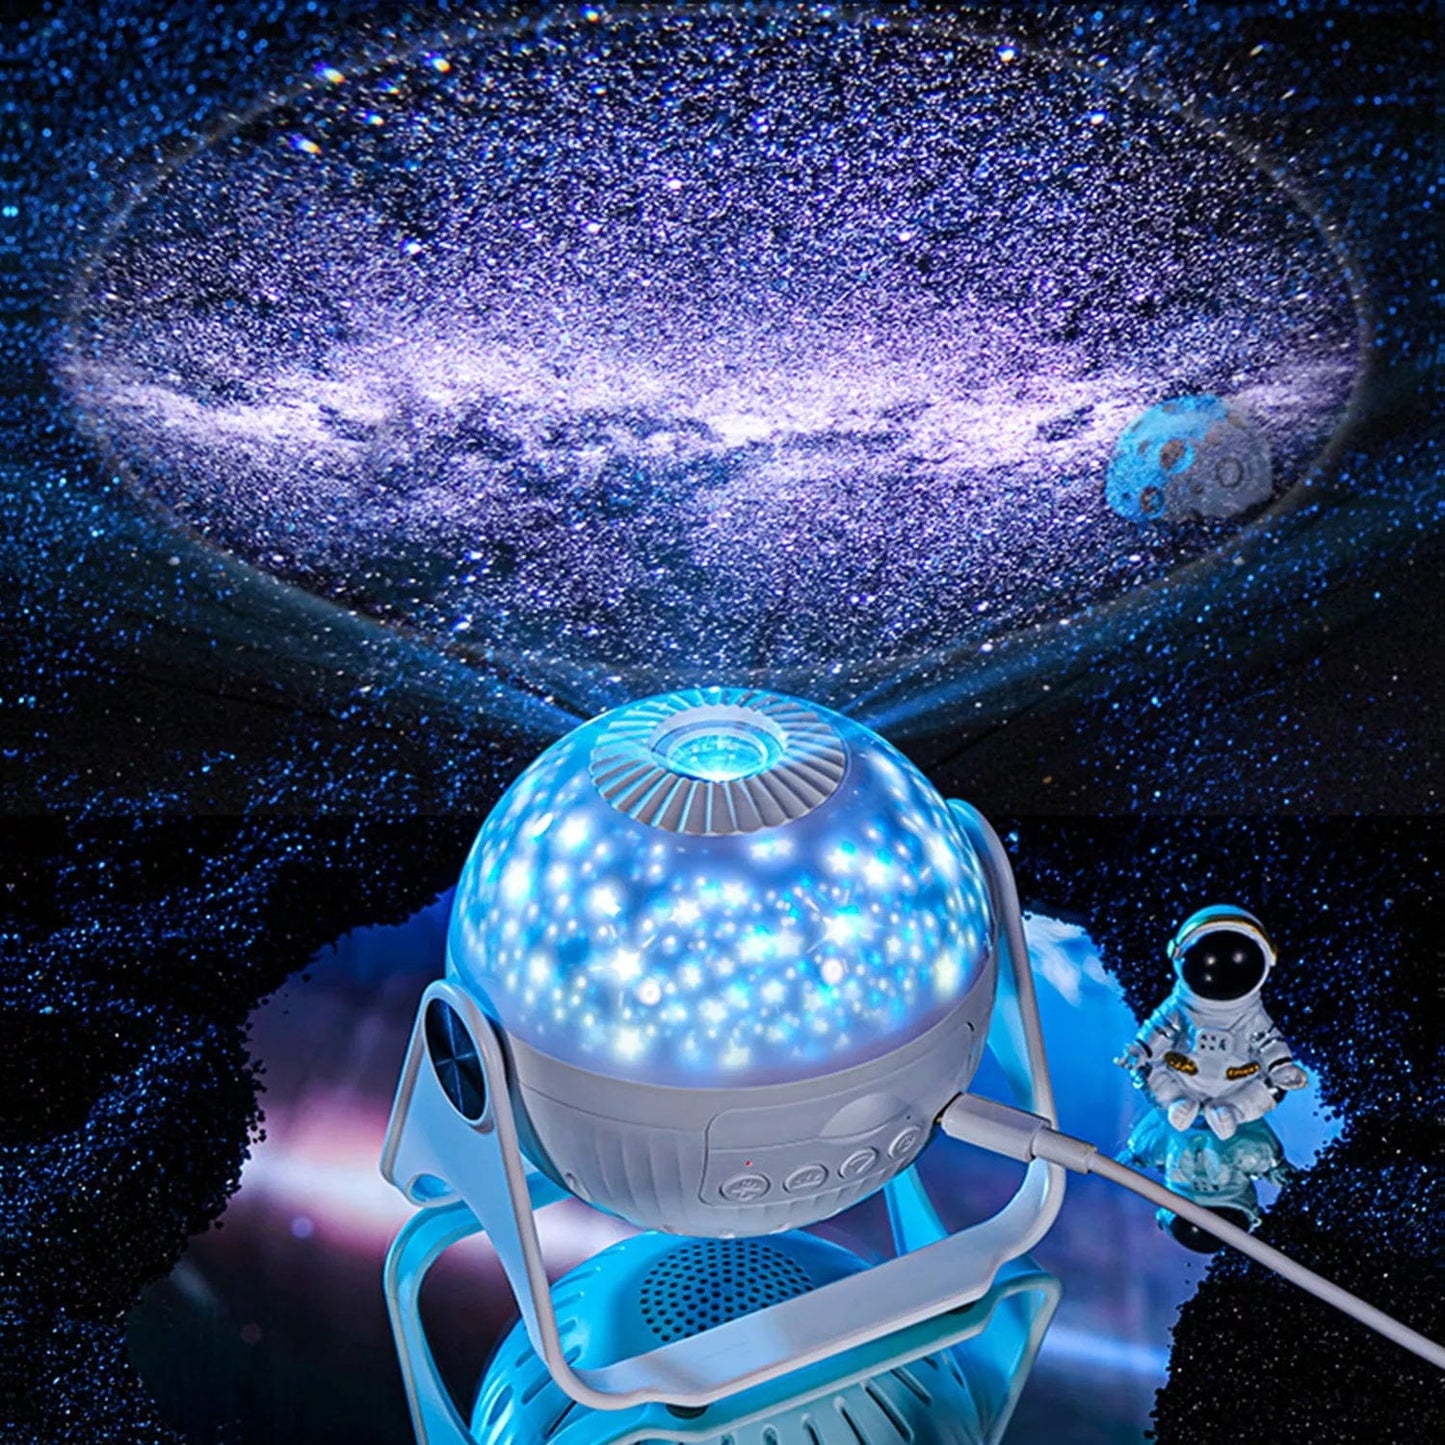 Planetarium Projector by Sharper Image @